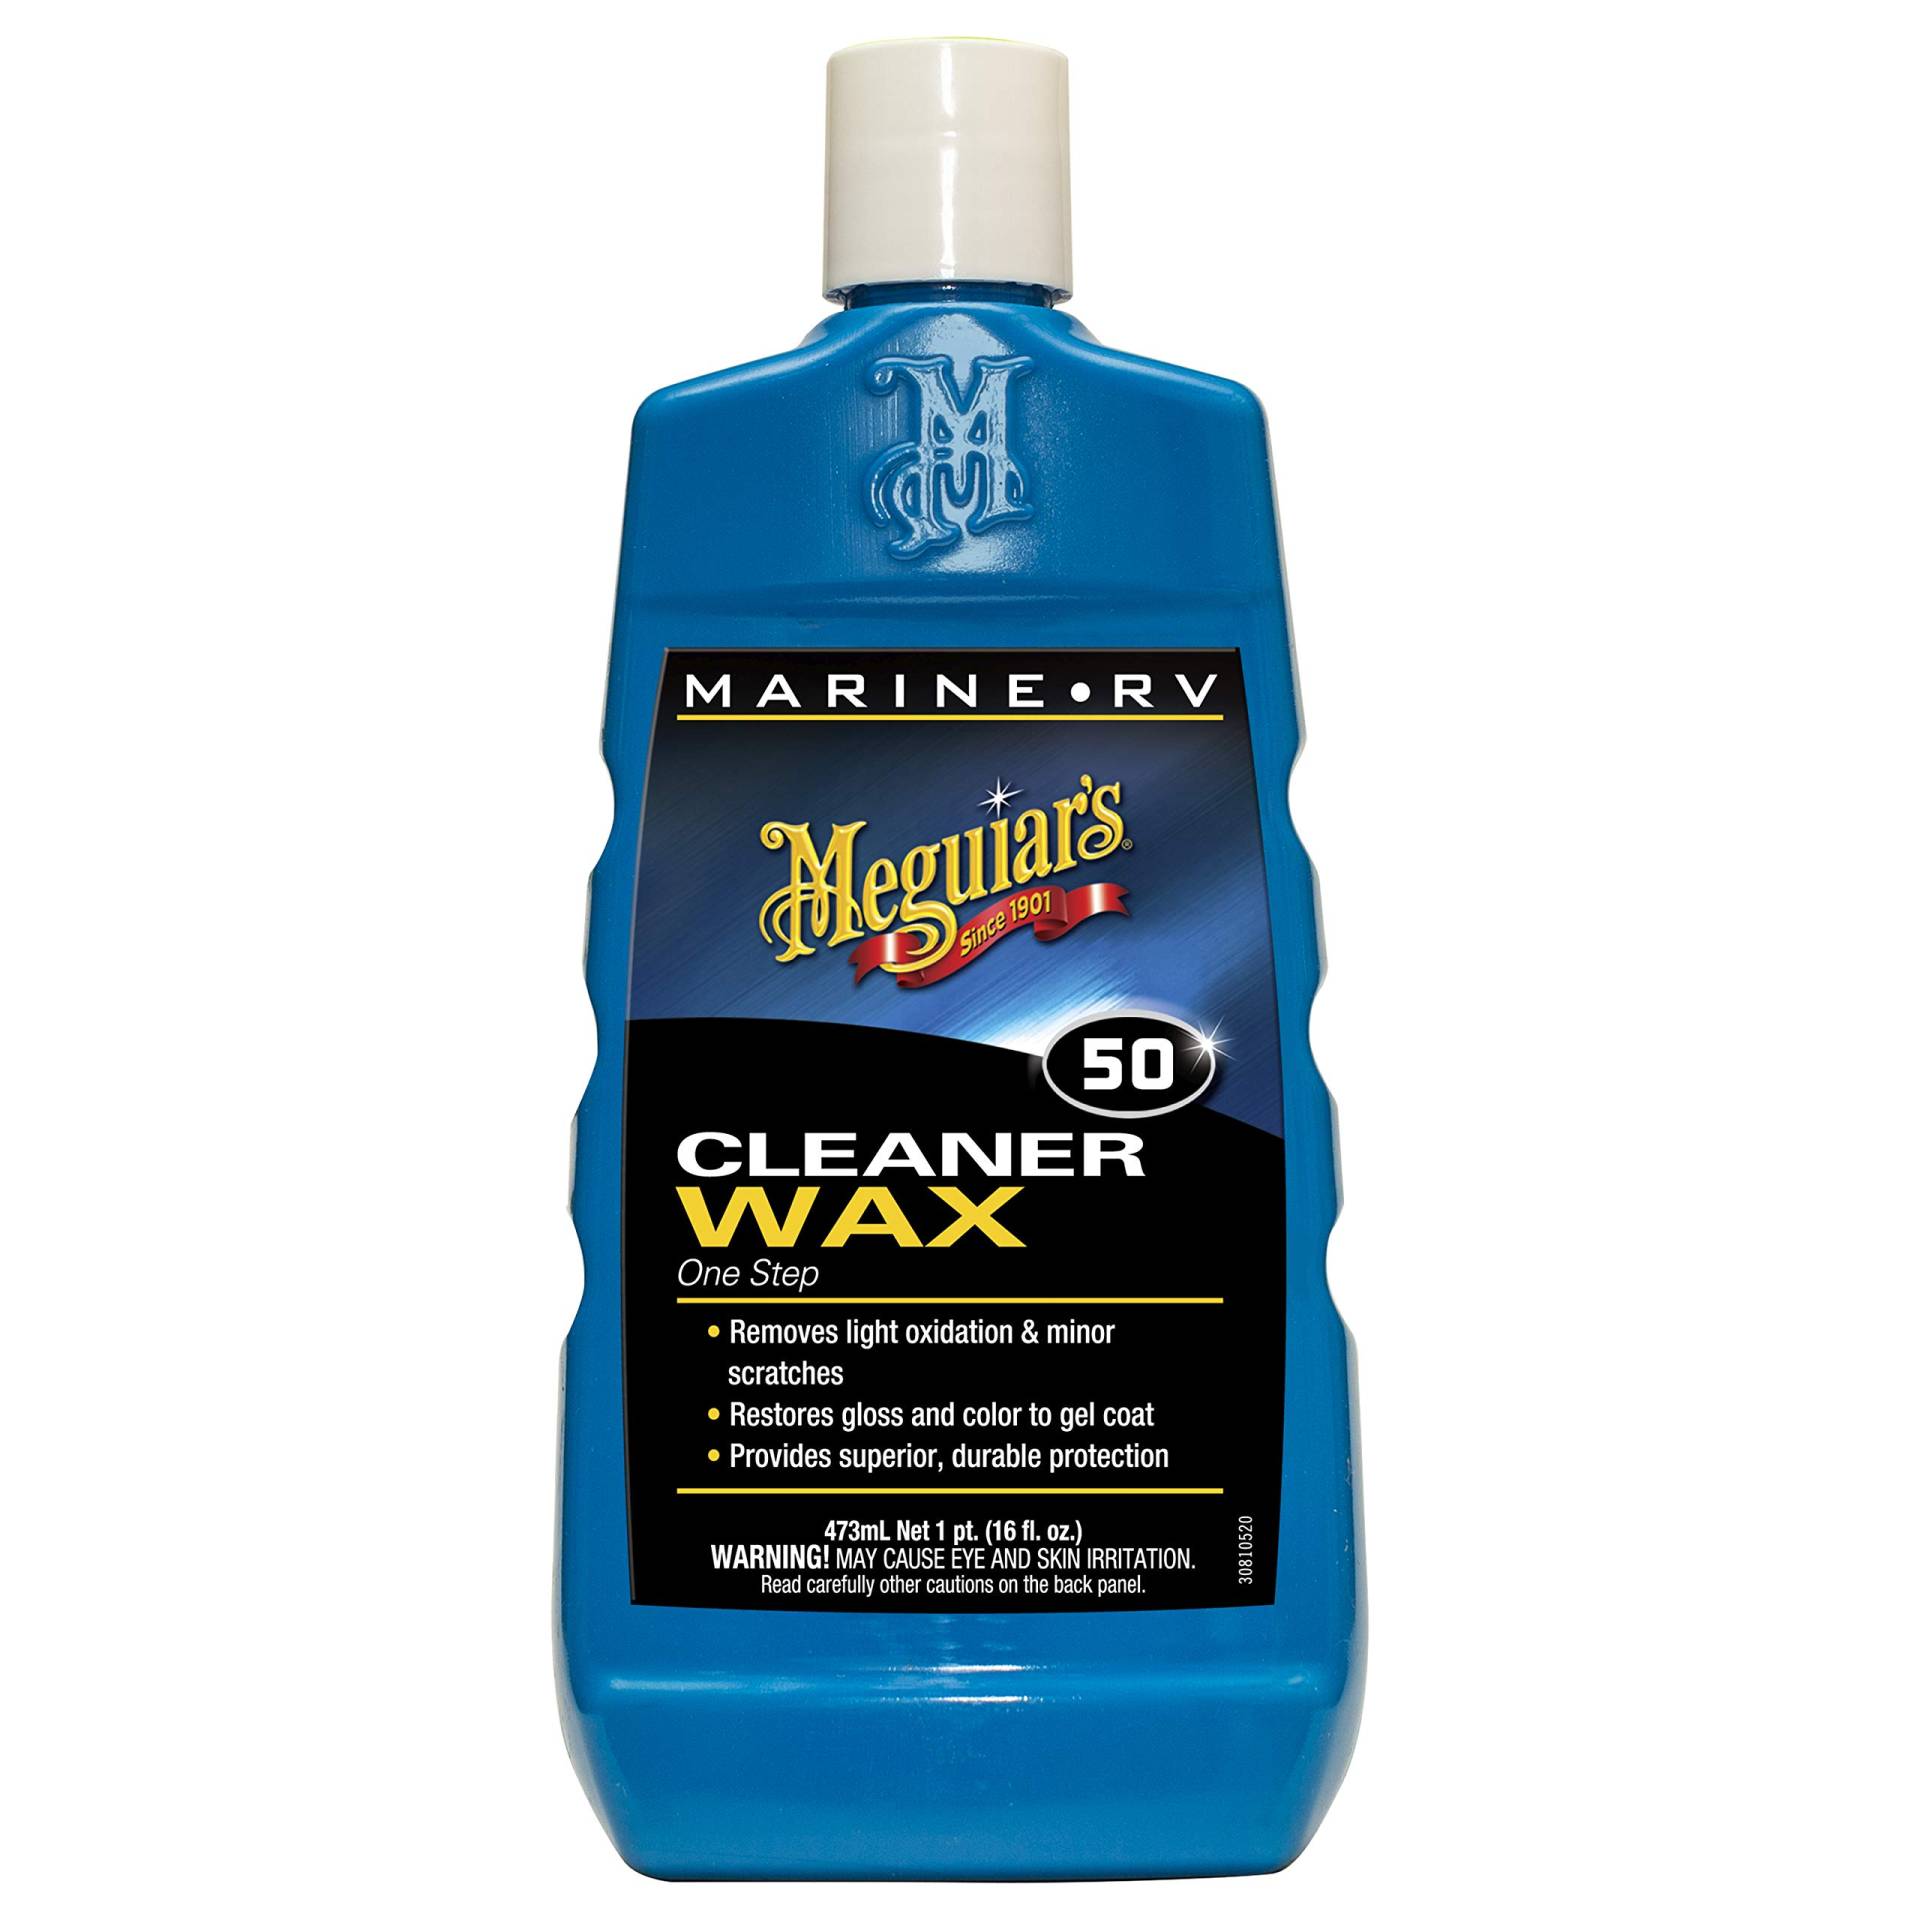 Meguiar's M5016 Marine RV Cleaner Wax One Step liquid Wachs, 473ml von Meguiar's